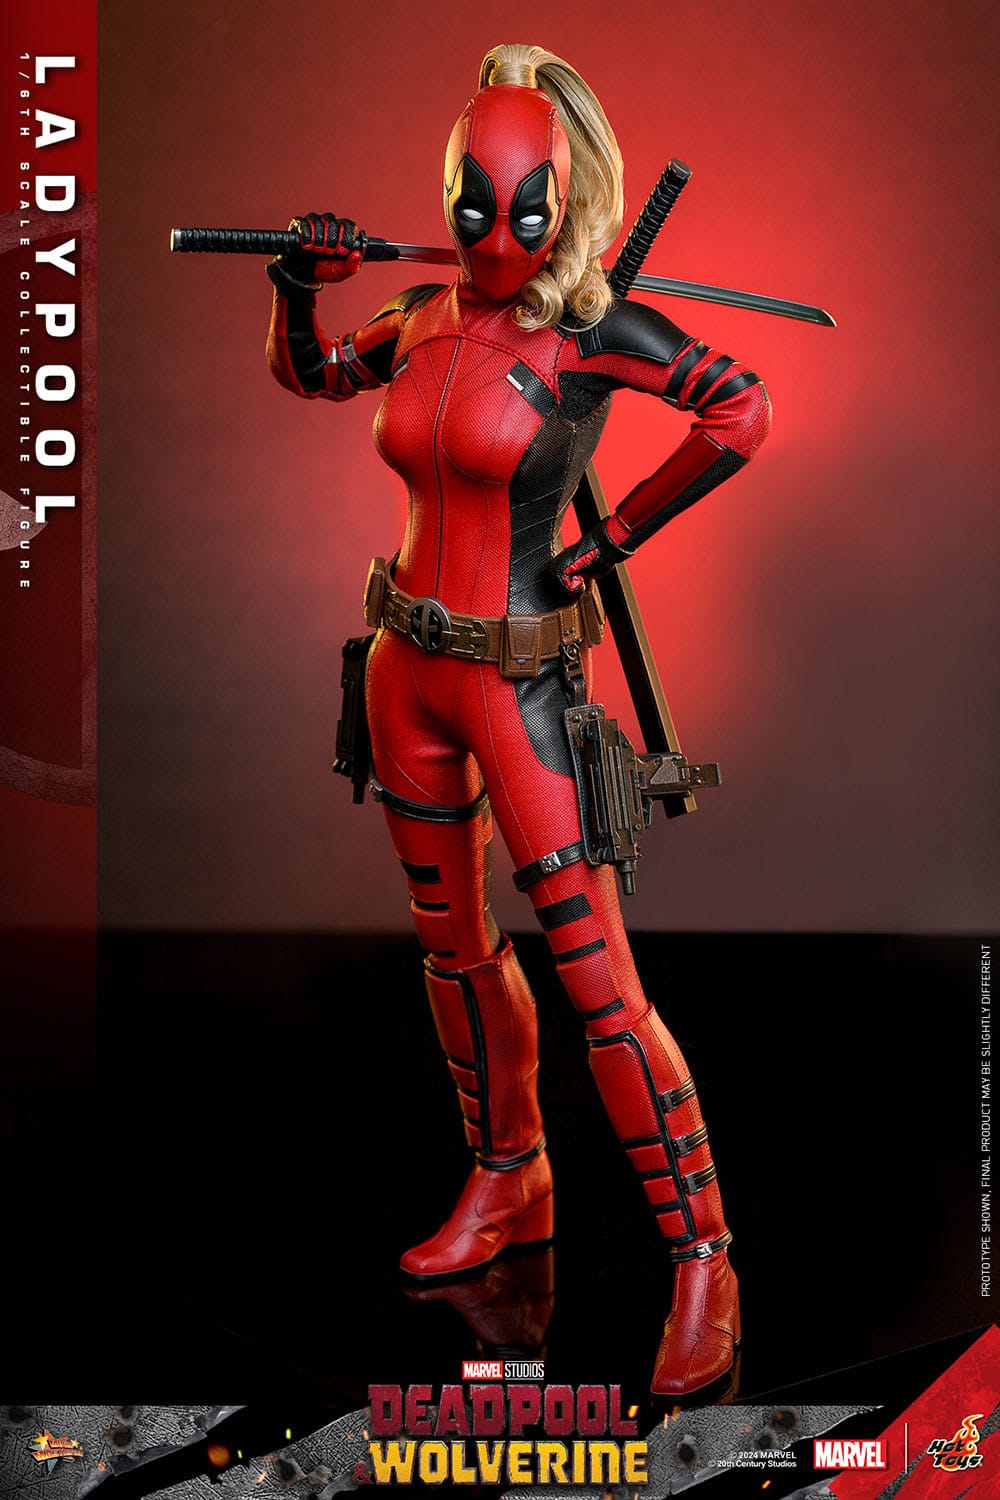 Hot Toys Deadpool & Wolverine Ladypool 1/6th Scale Figure